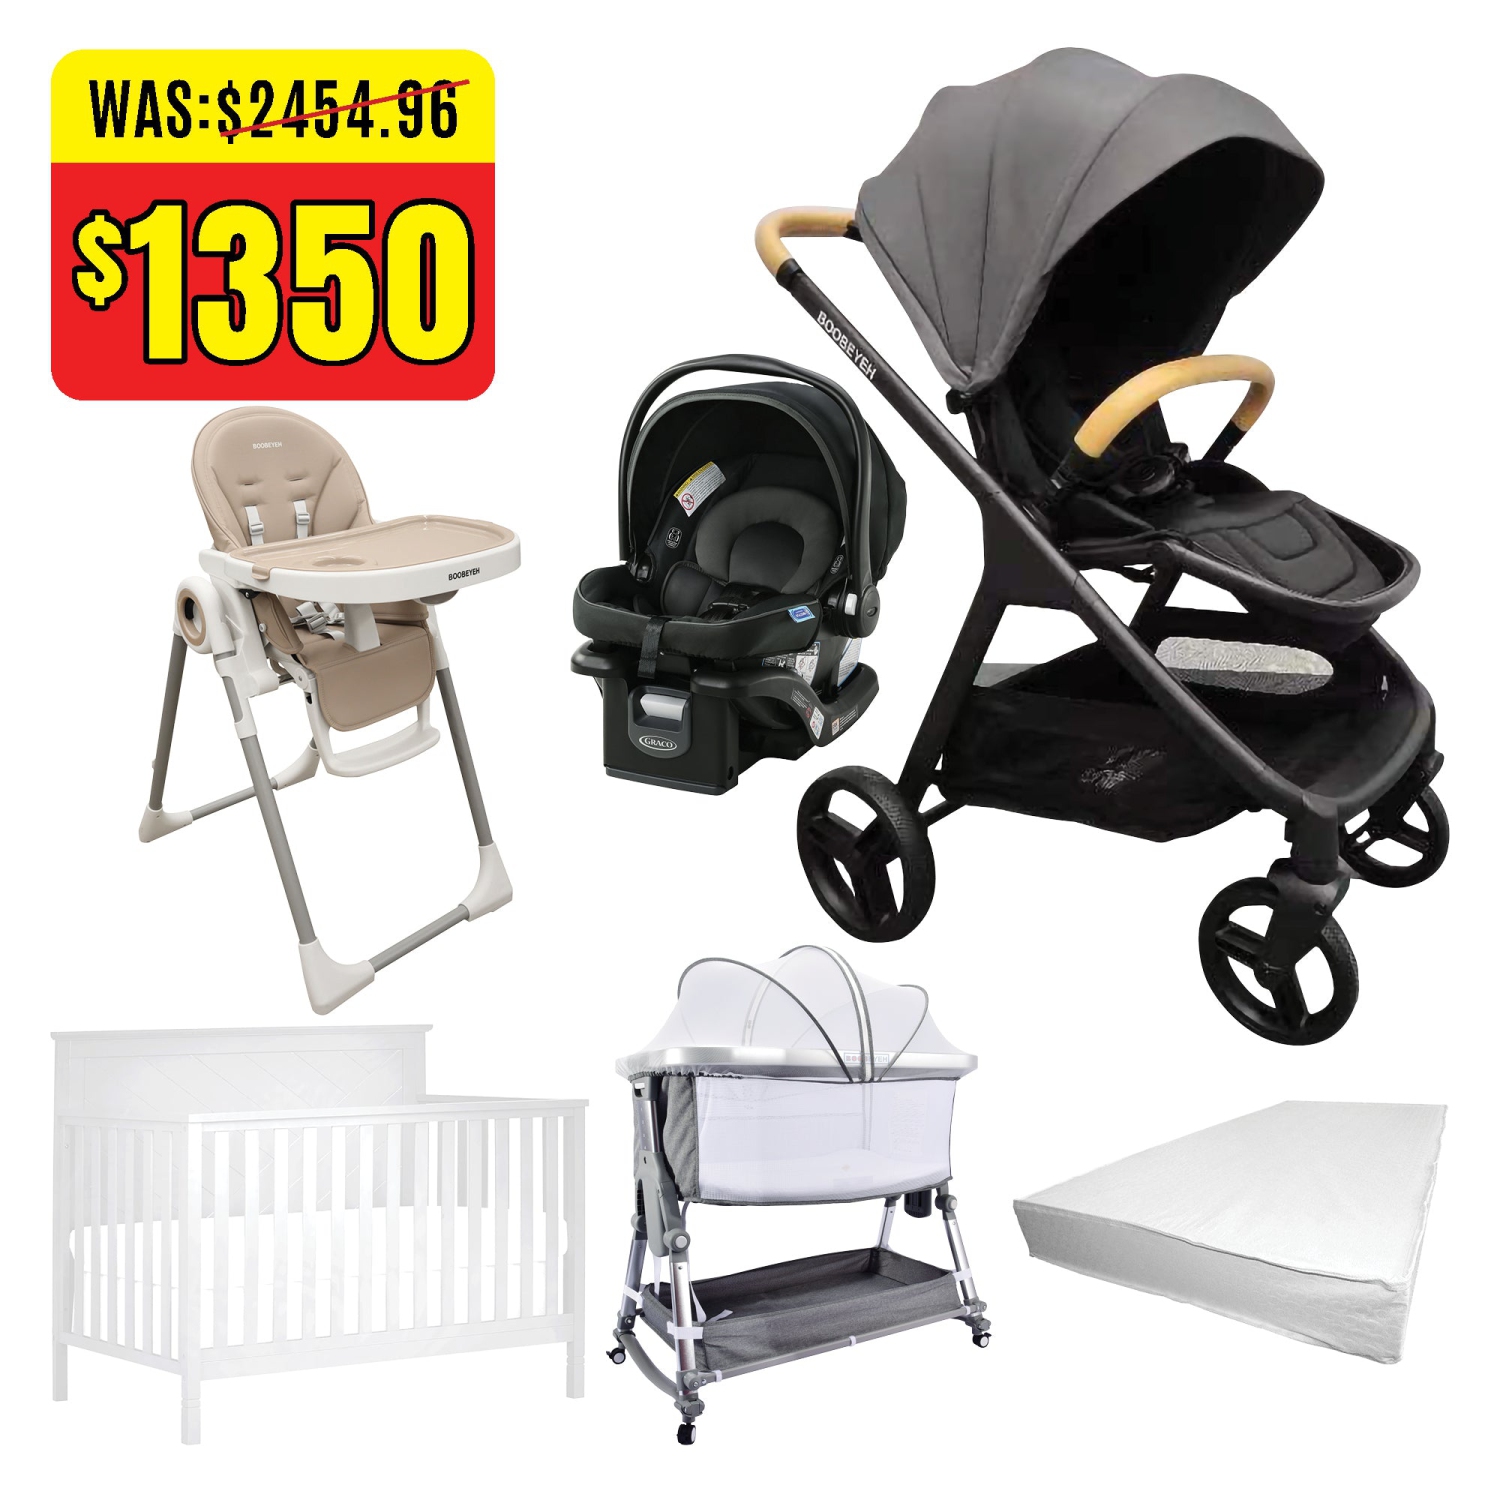 Boobeyeh stroller starter kit, Graco car seat, boobeyeh high chair, crib and basic mattress